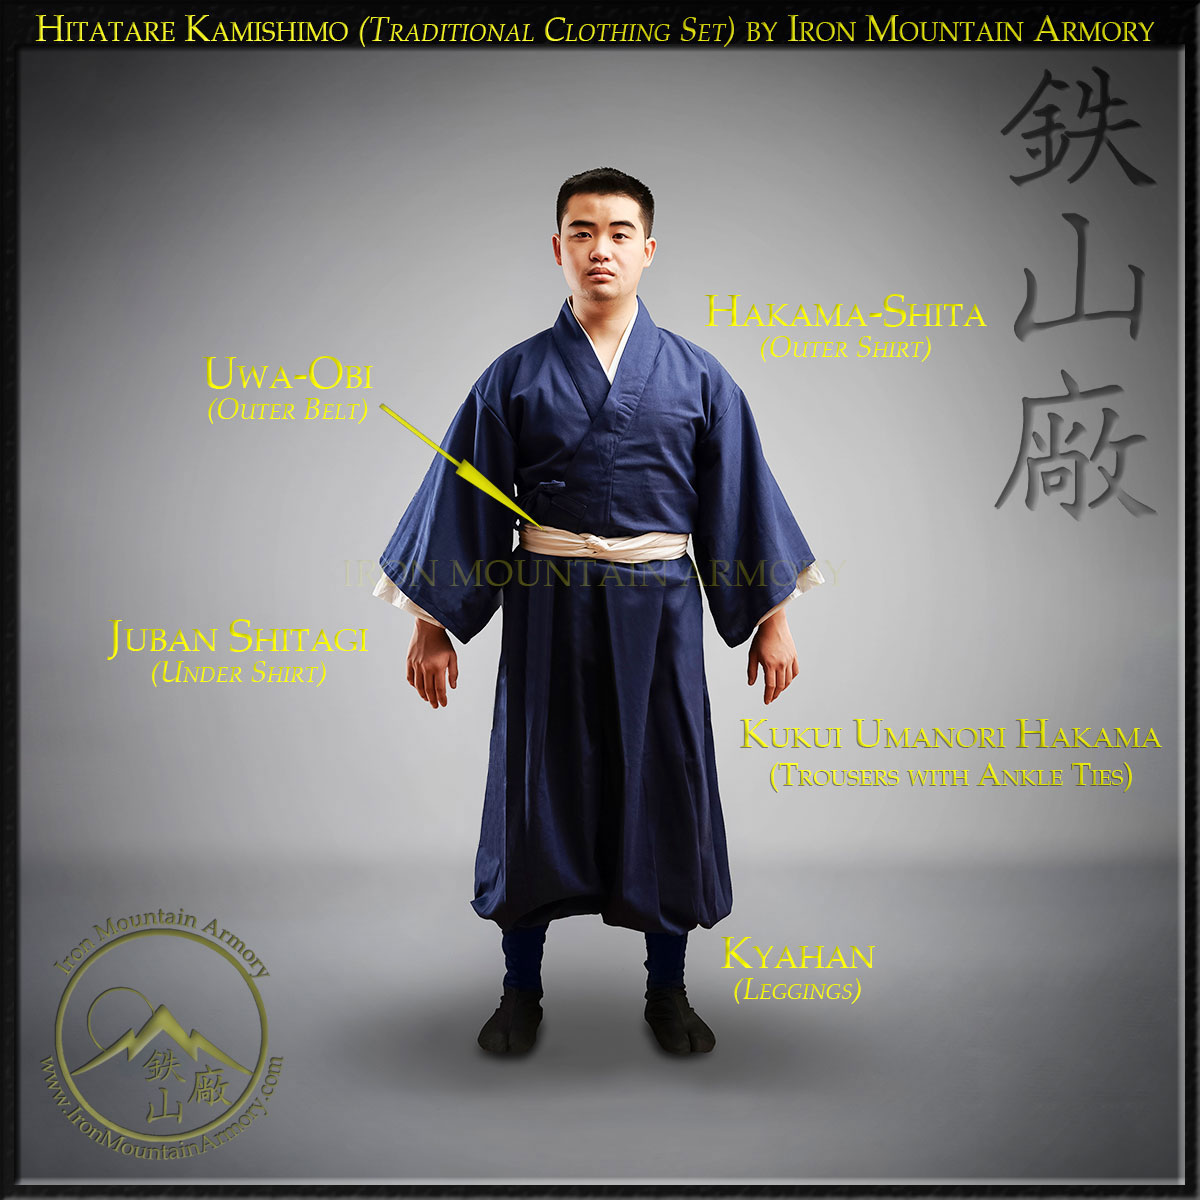 Hitatare Kamishimo: Traditional Japanese Clothing Online Store